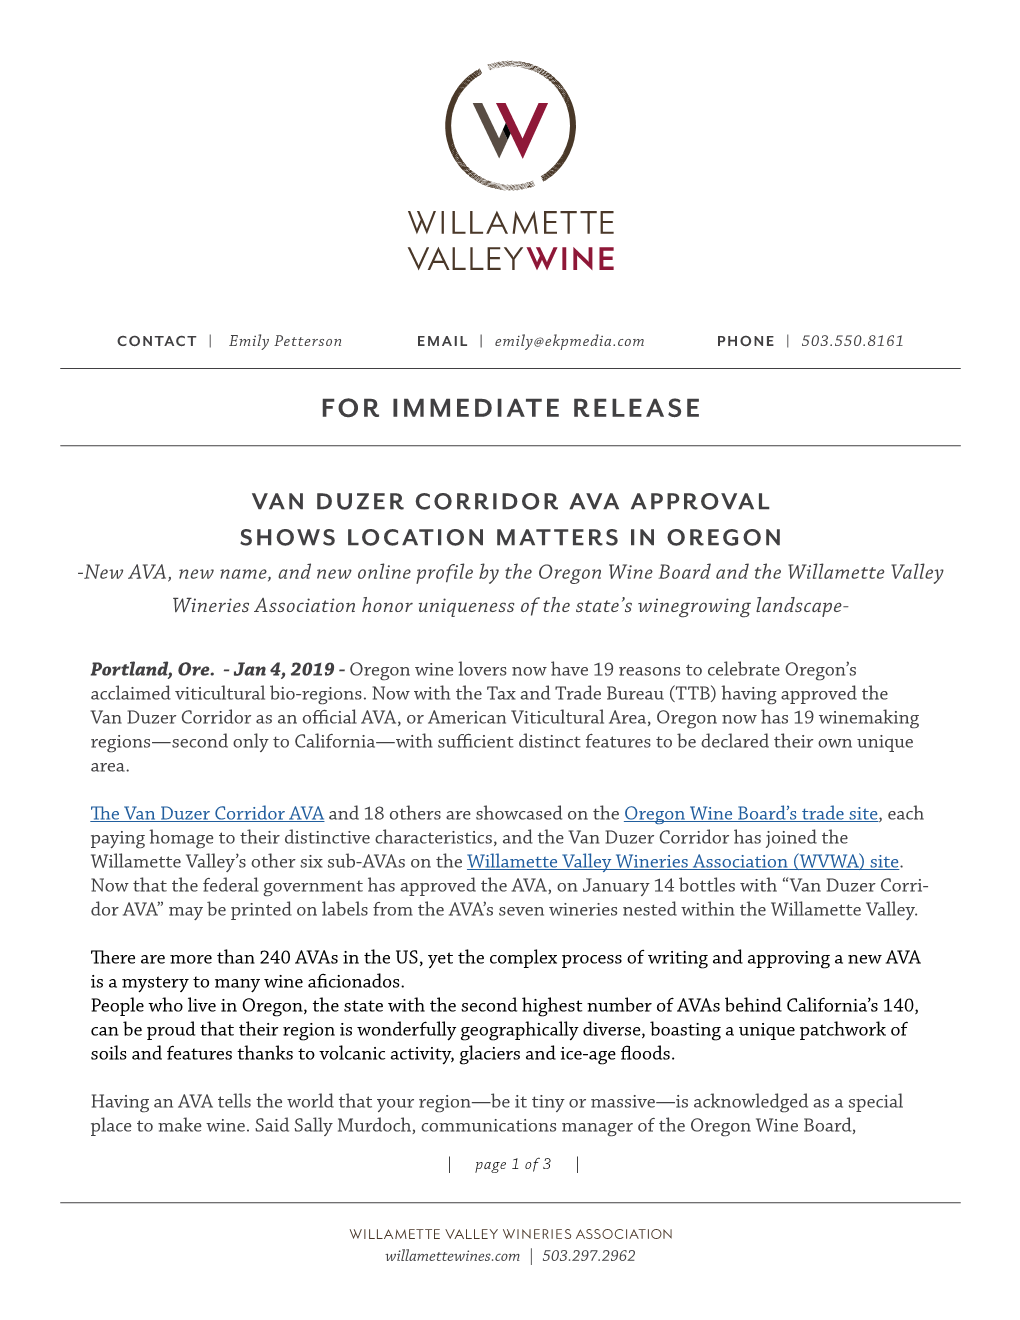 Van Duzer Corridor Ava Approval Shows Location Matters in Oregon